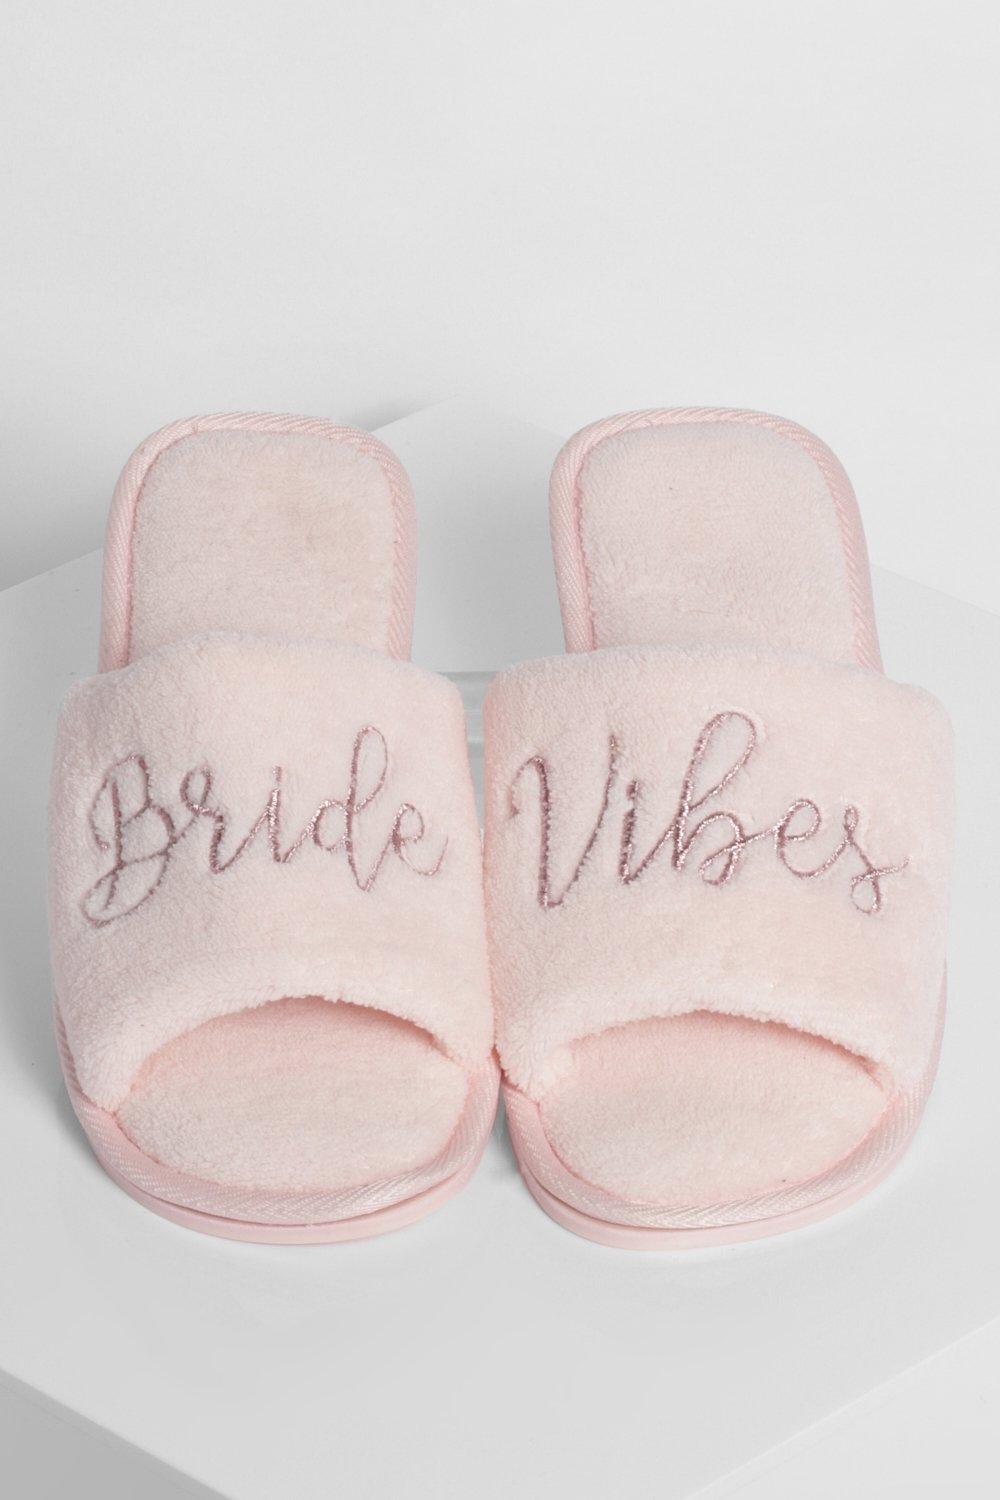 bride slippers asda